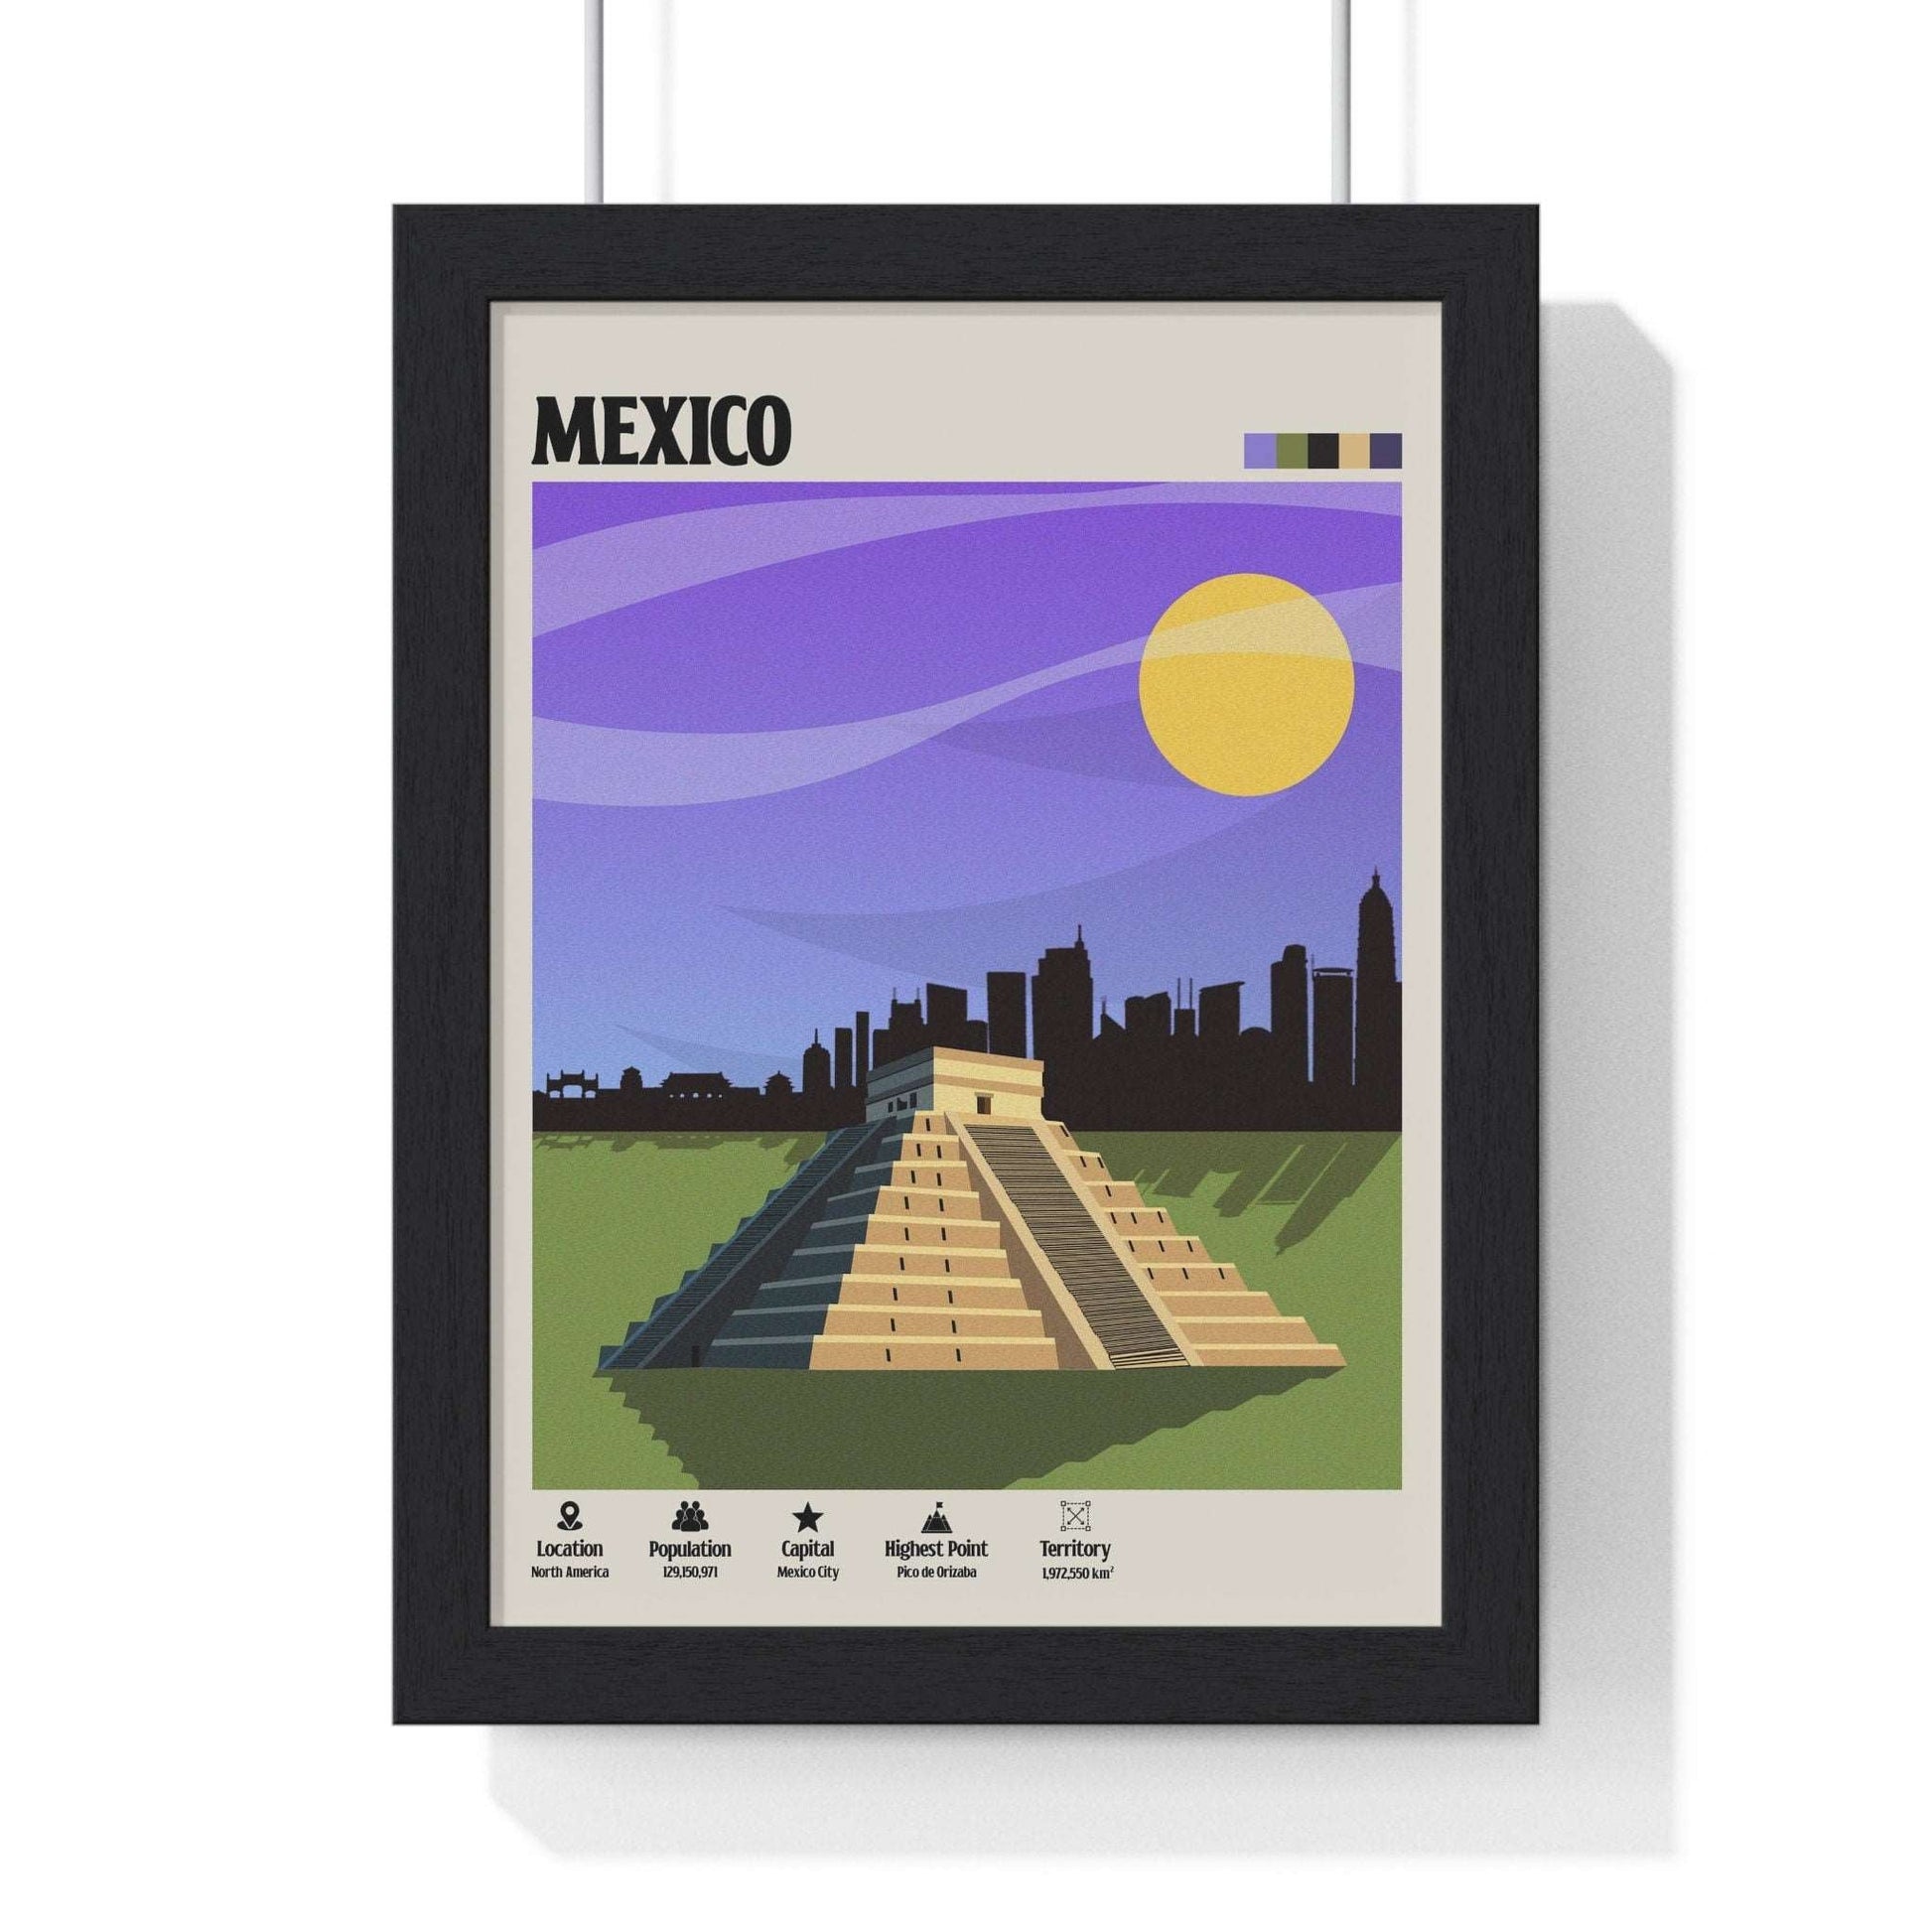 Mexico Travel Poster - Poster Kingz